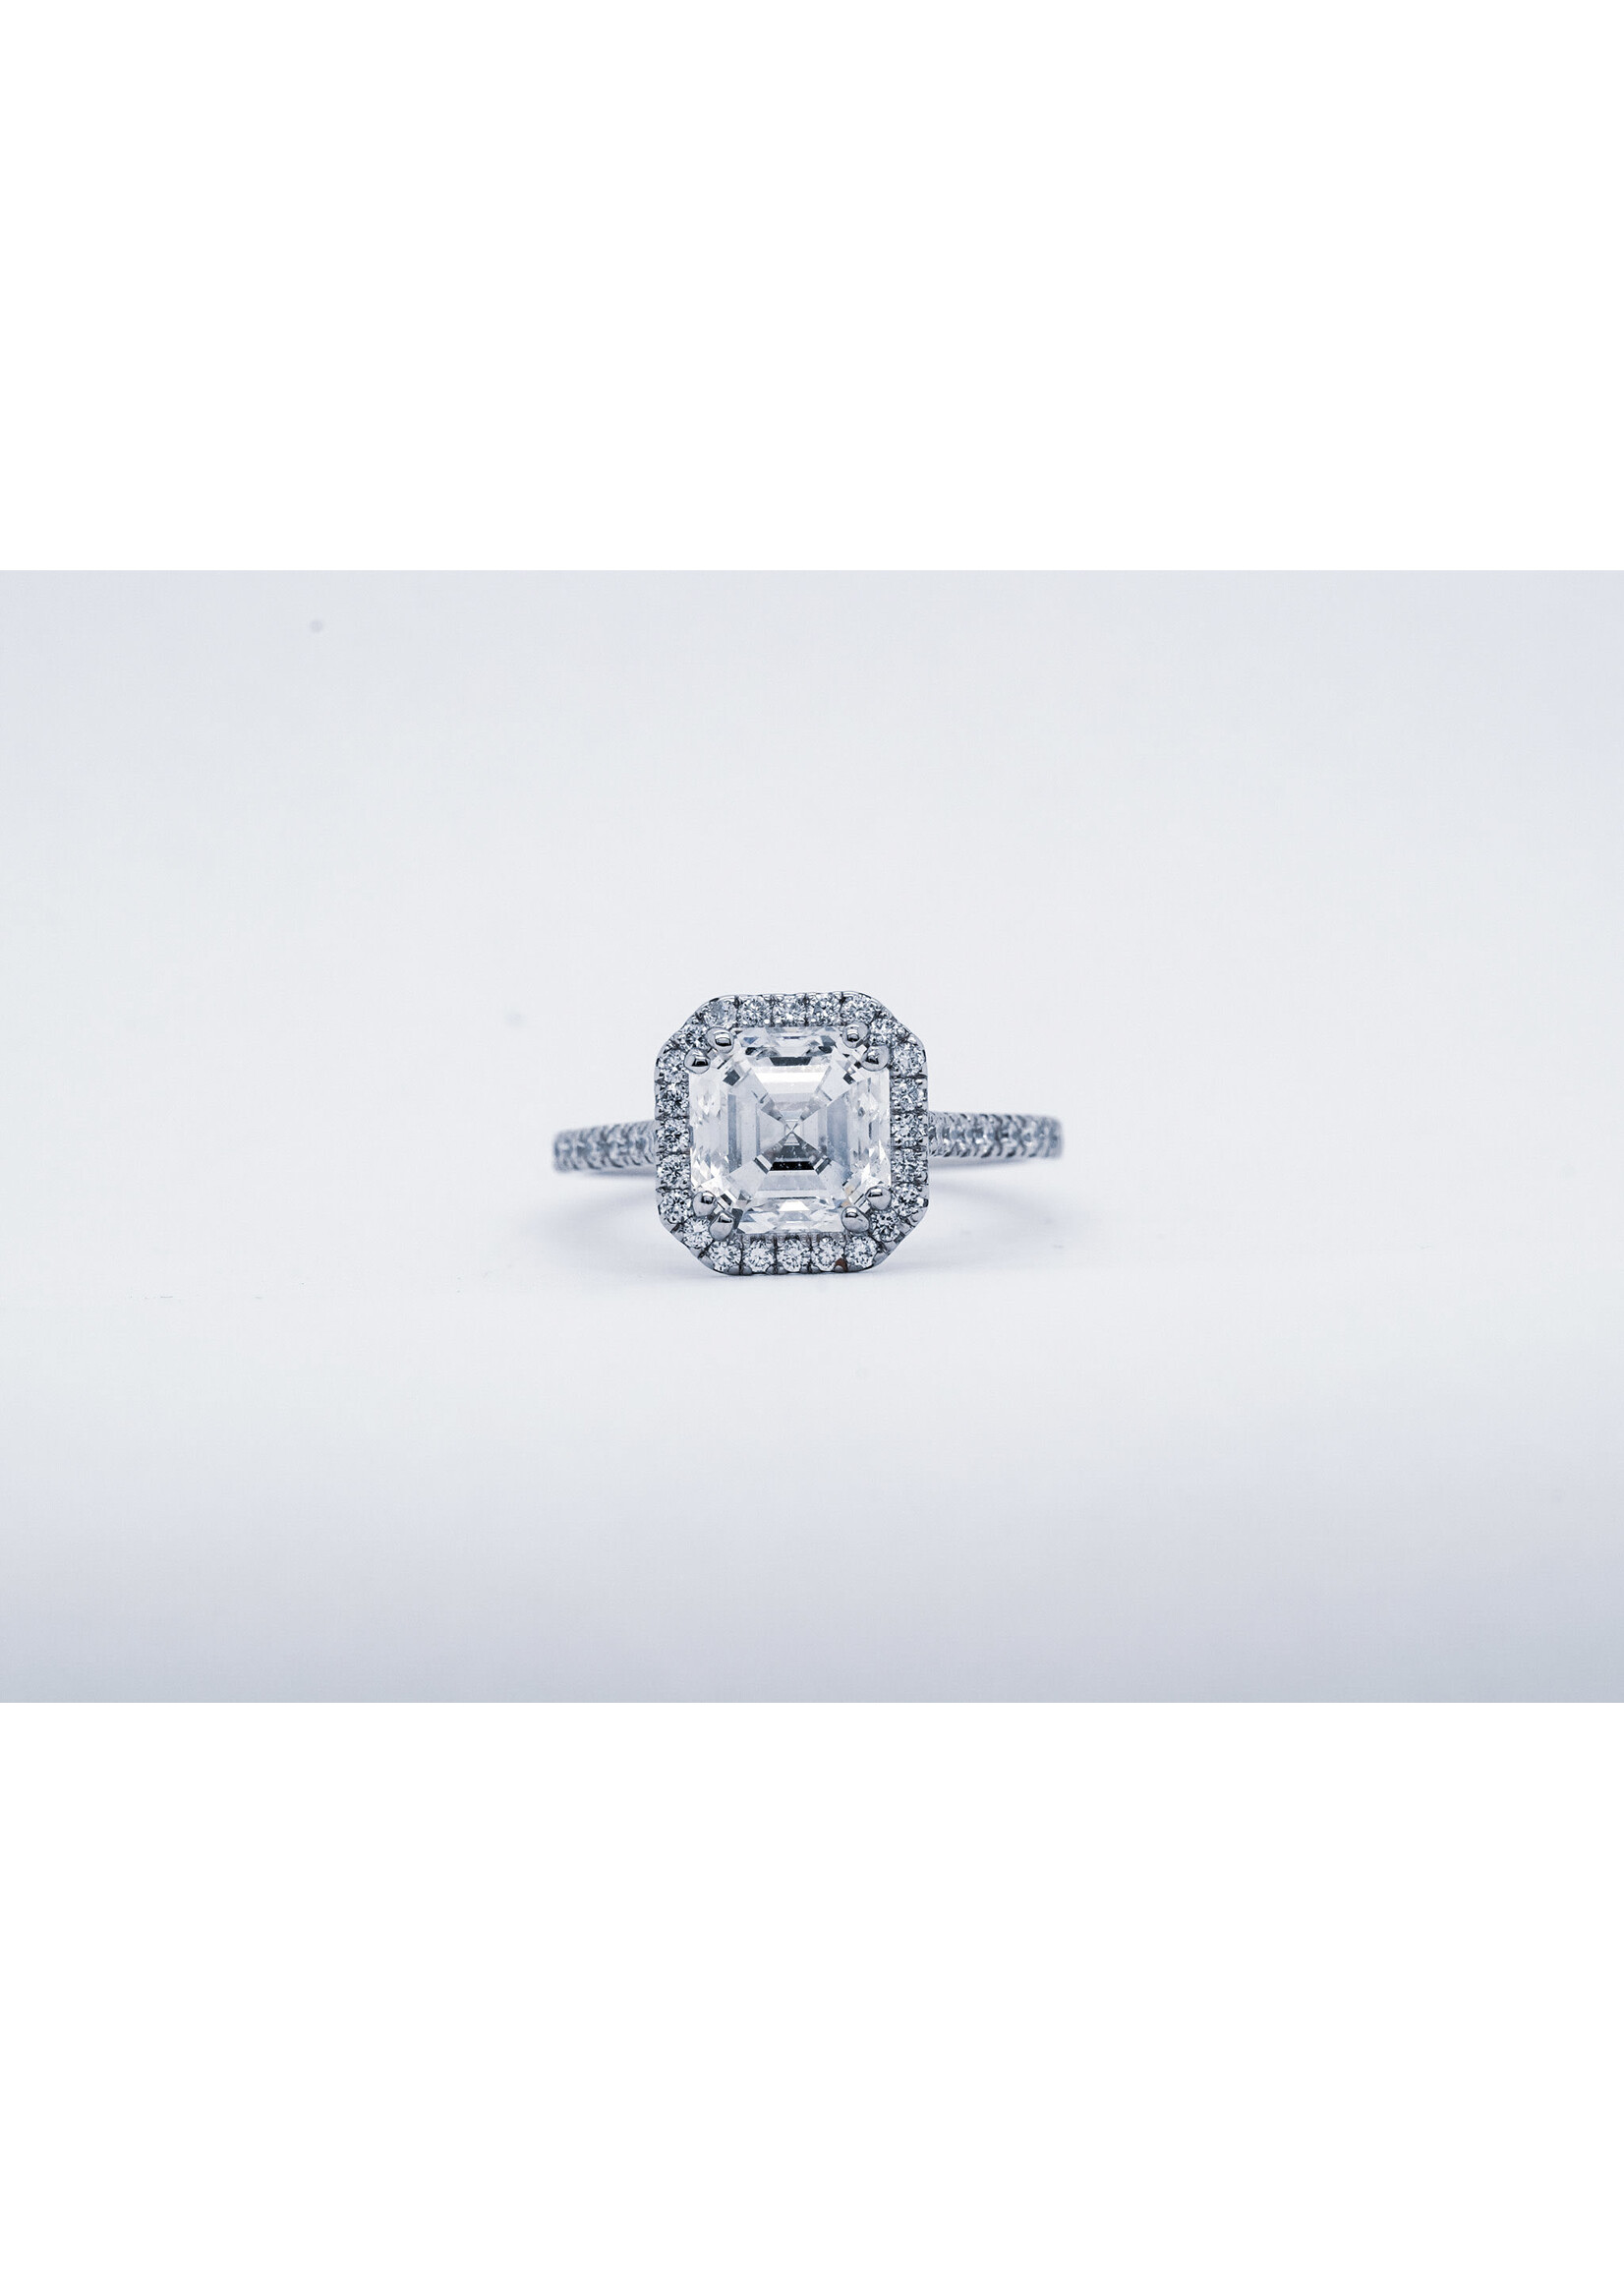 18KW 4.04g 2.93ctw (2.53ctr) F/SI1 Asscher Cut Diamond Halo Engagement Ring (size 5)